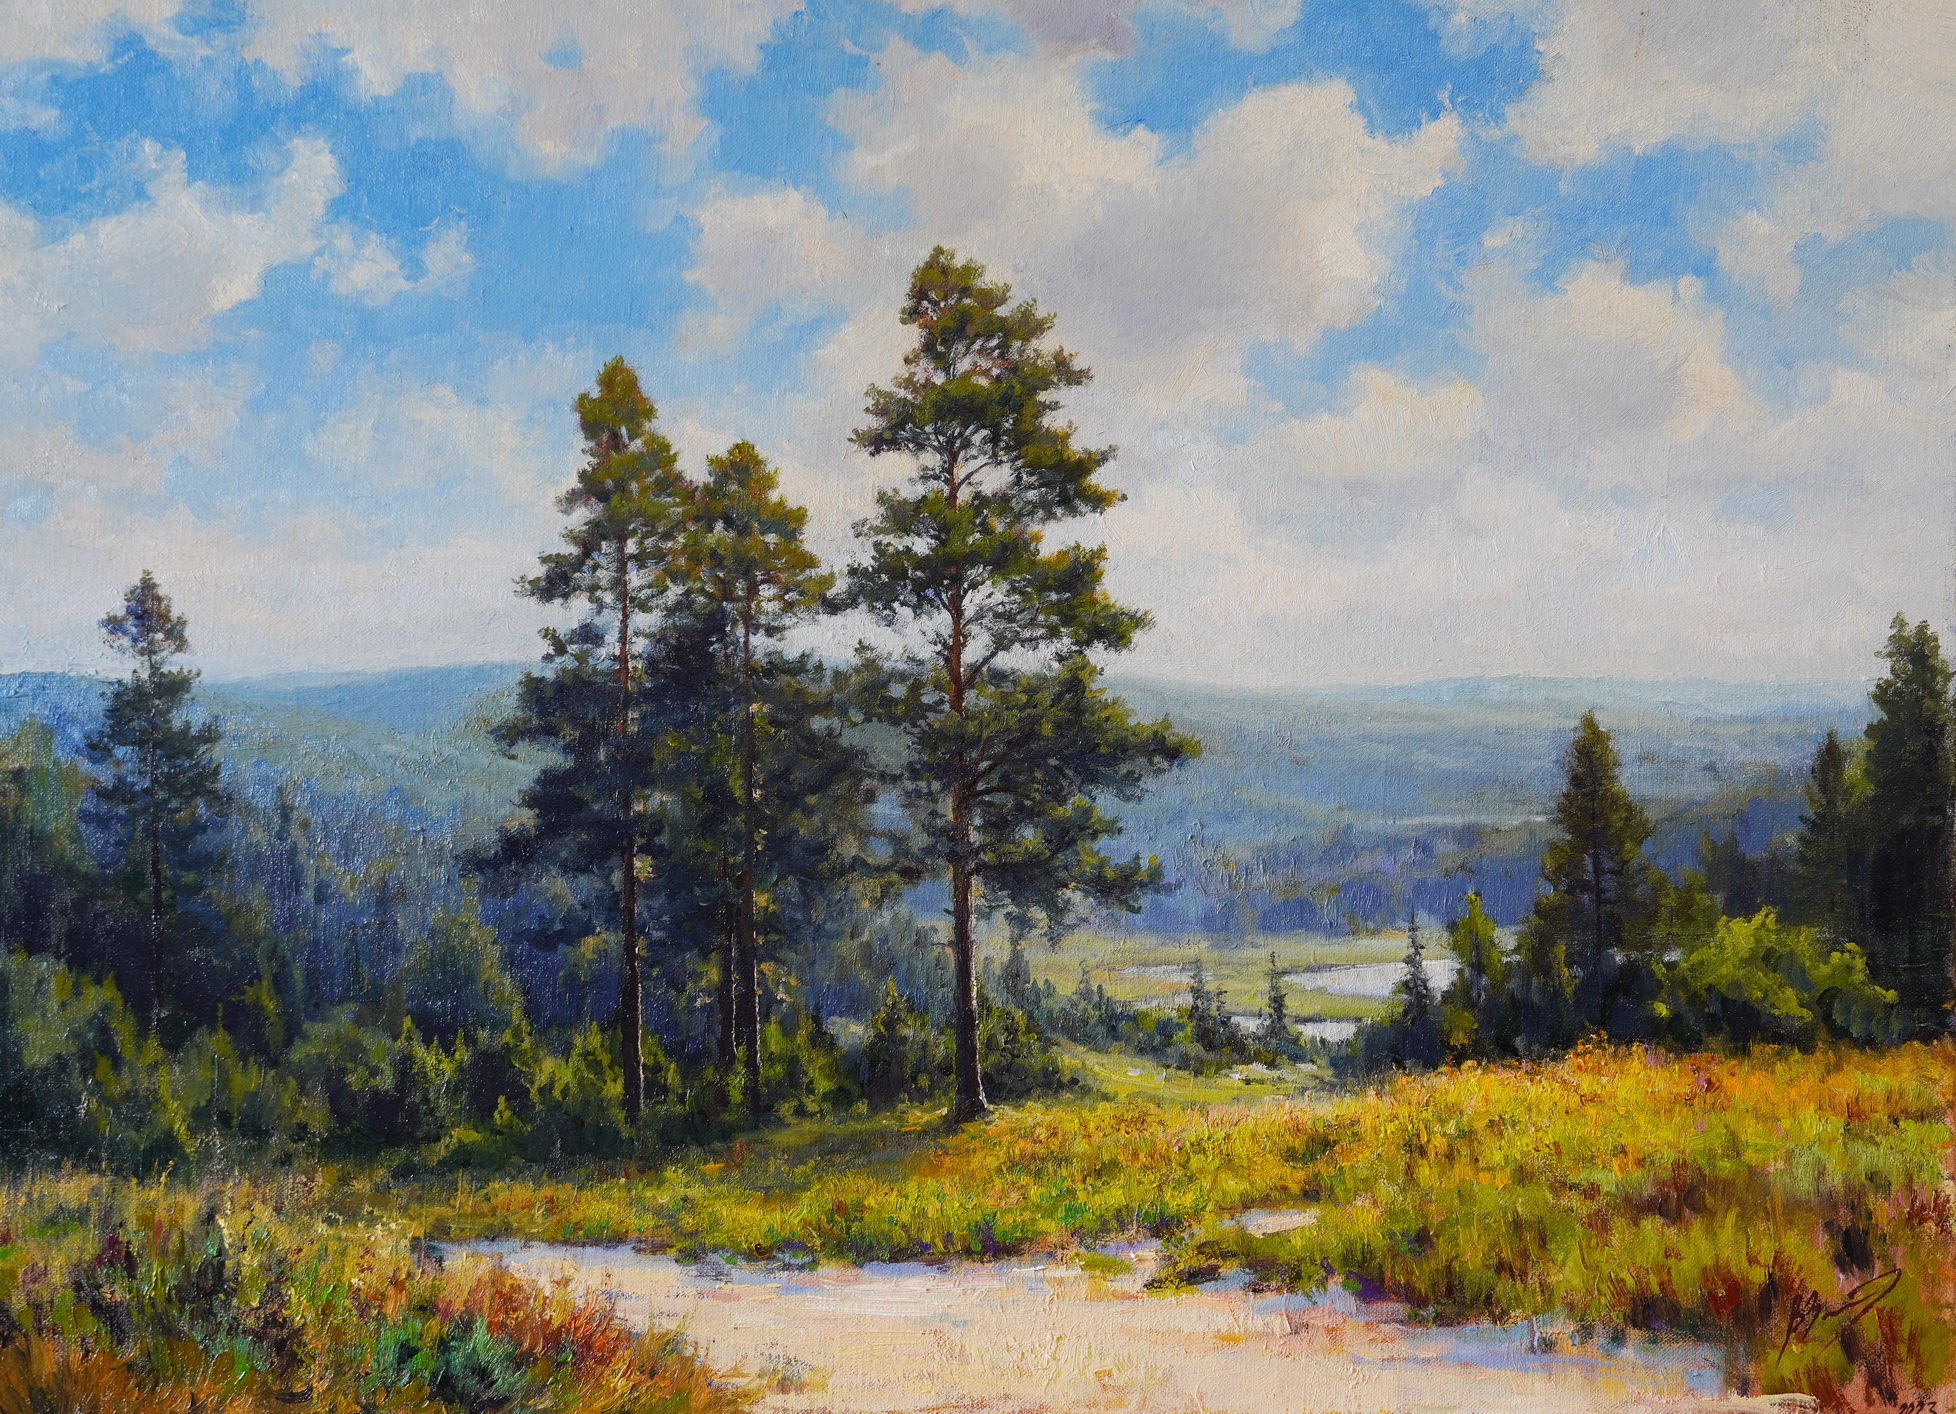 Midday - 1, Vadim Zainullin, Buy the painting Oil